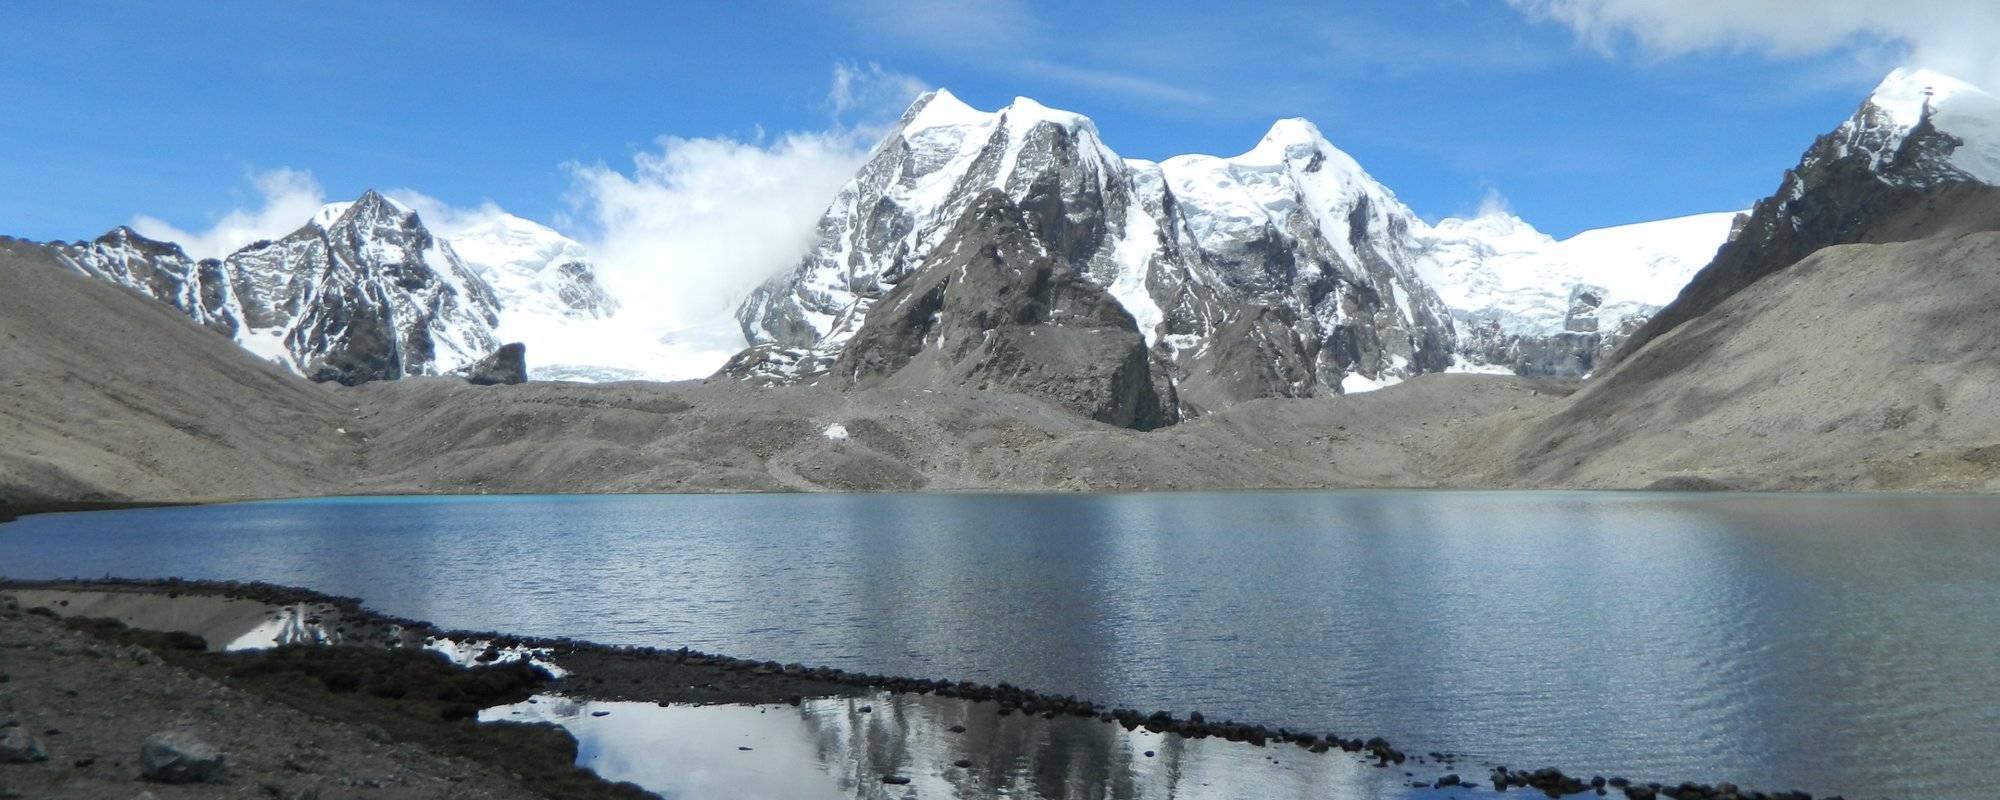 Unforgettable Sikkim | The Gurudongmar Lake | Travel Blog #1